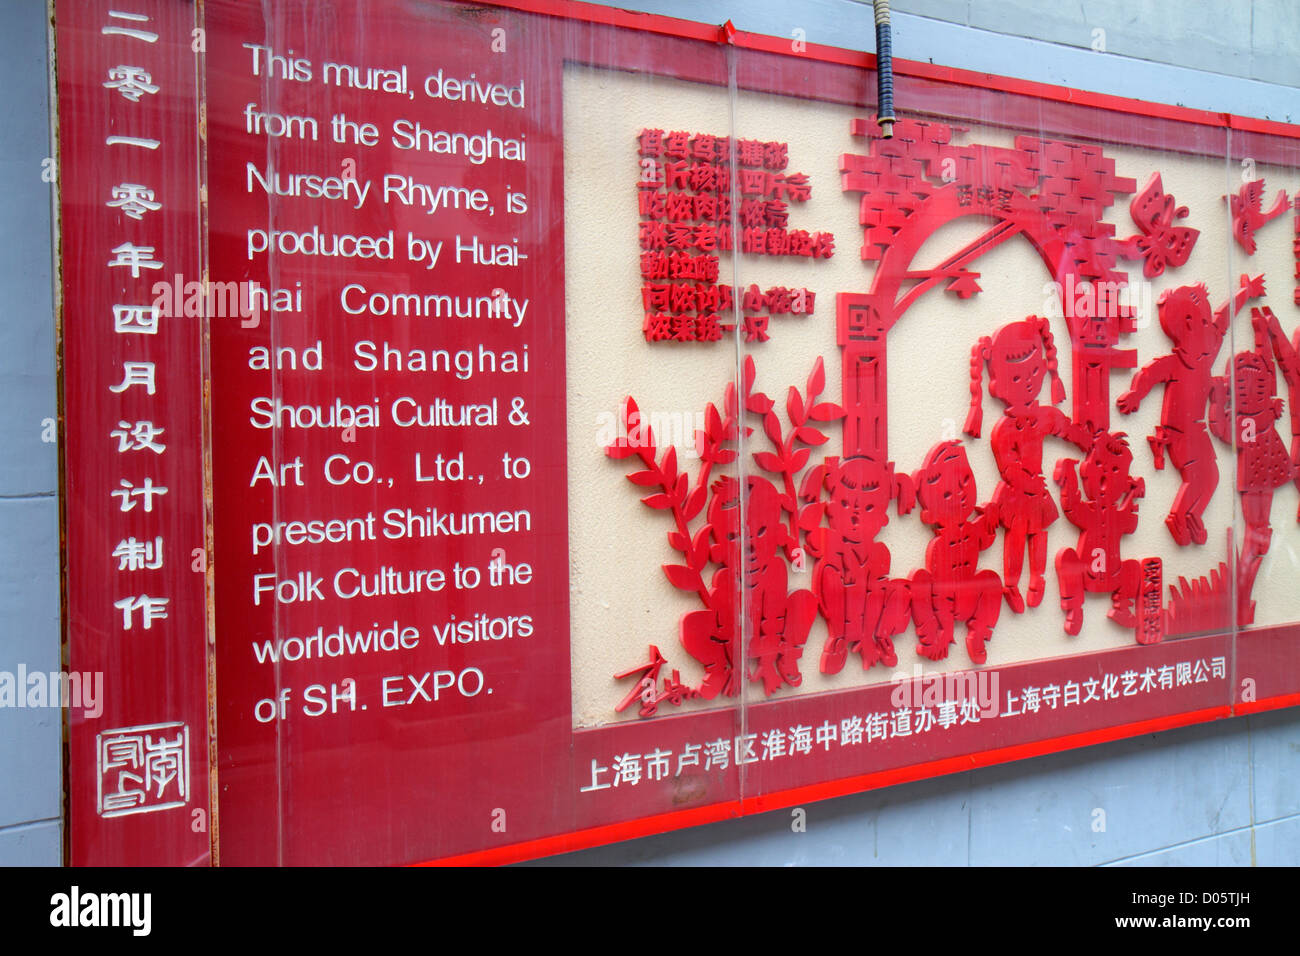 Shanghai China,Chinese Luwan District,Xintiandi,Fuxing Middle Road,Huai hai Community,mural,depicts nursery rhyme,Mandarin,hanzi,characters,symbols,En Stock Photo